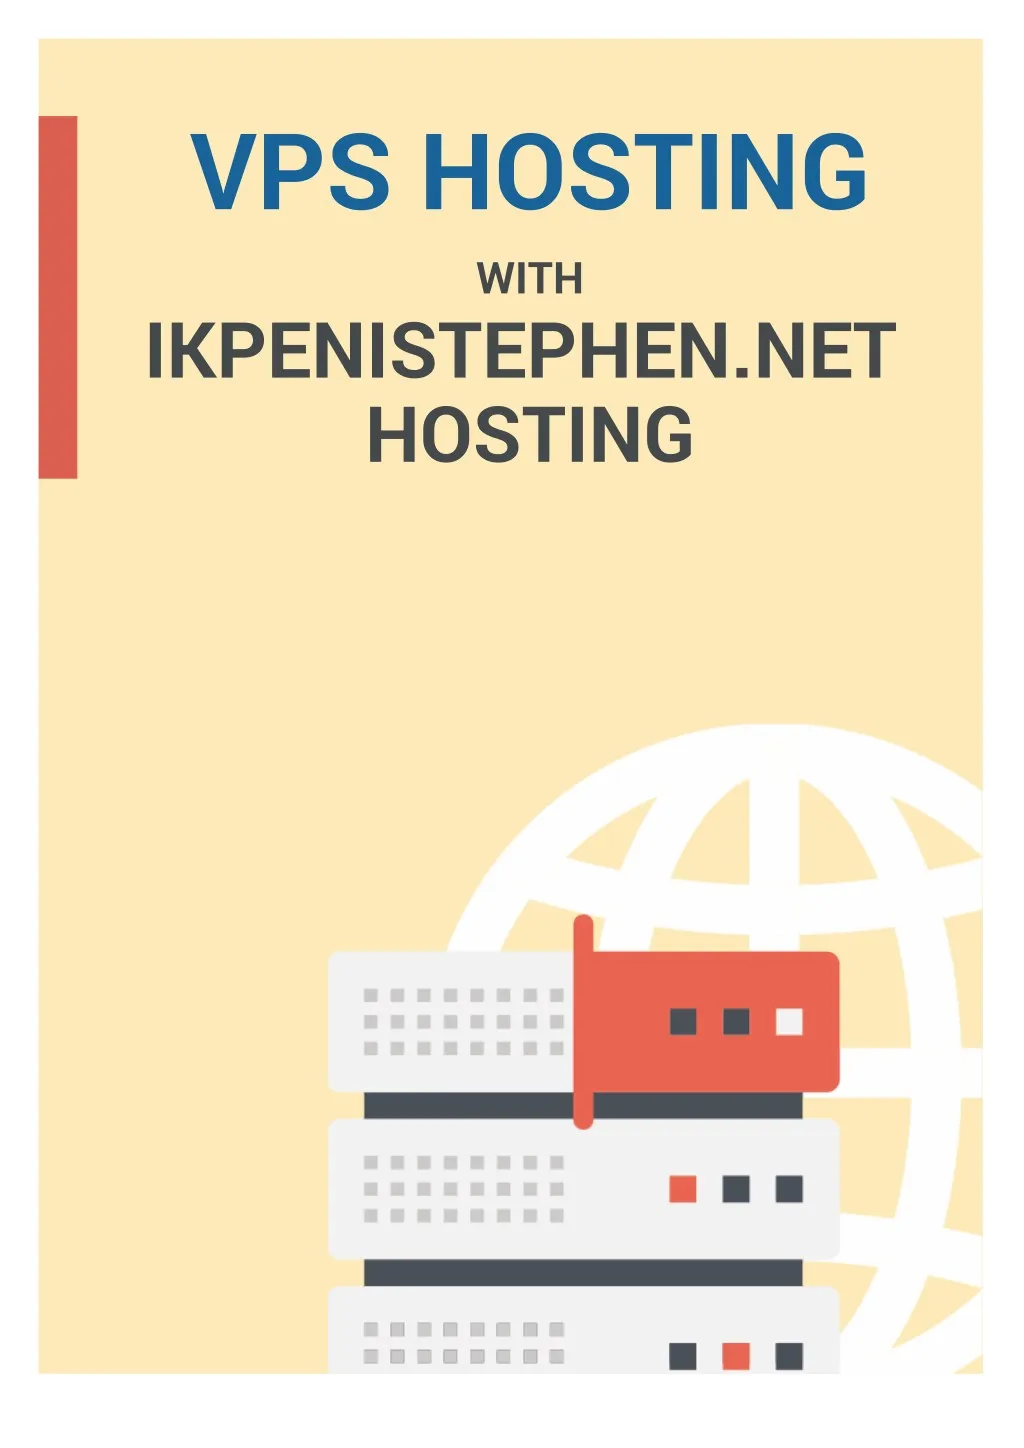 vps hosting with ikpenistephen net hosting